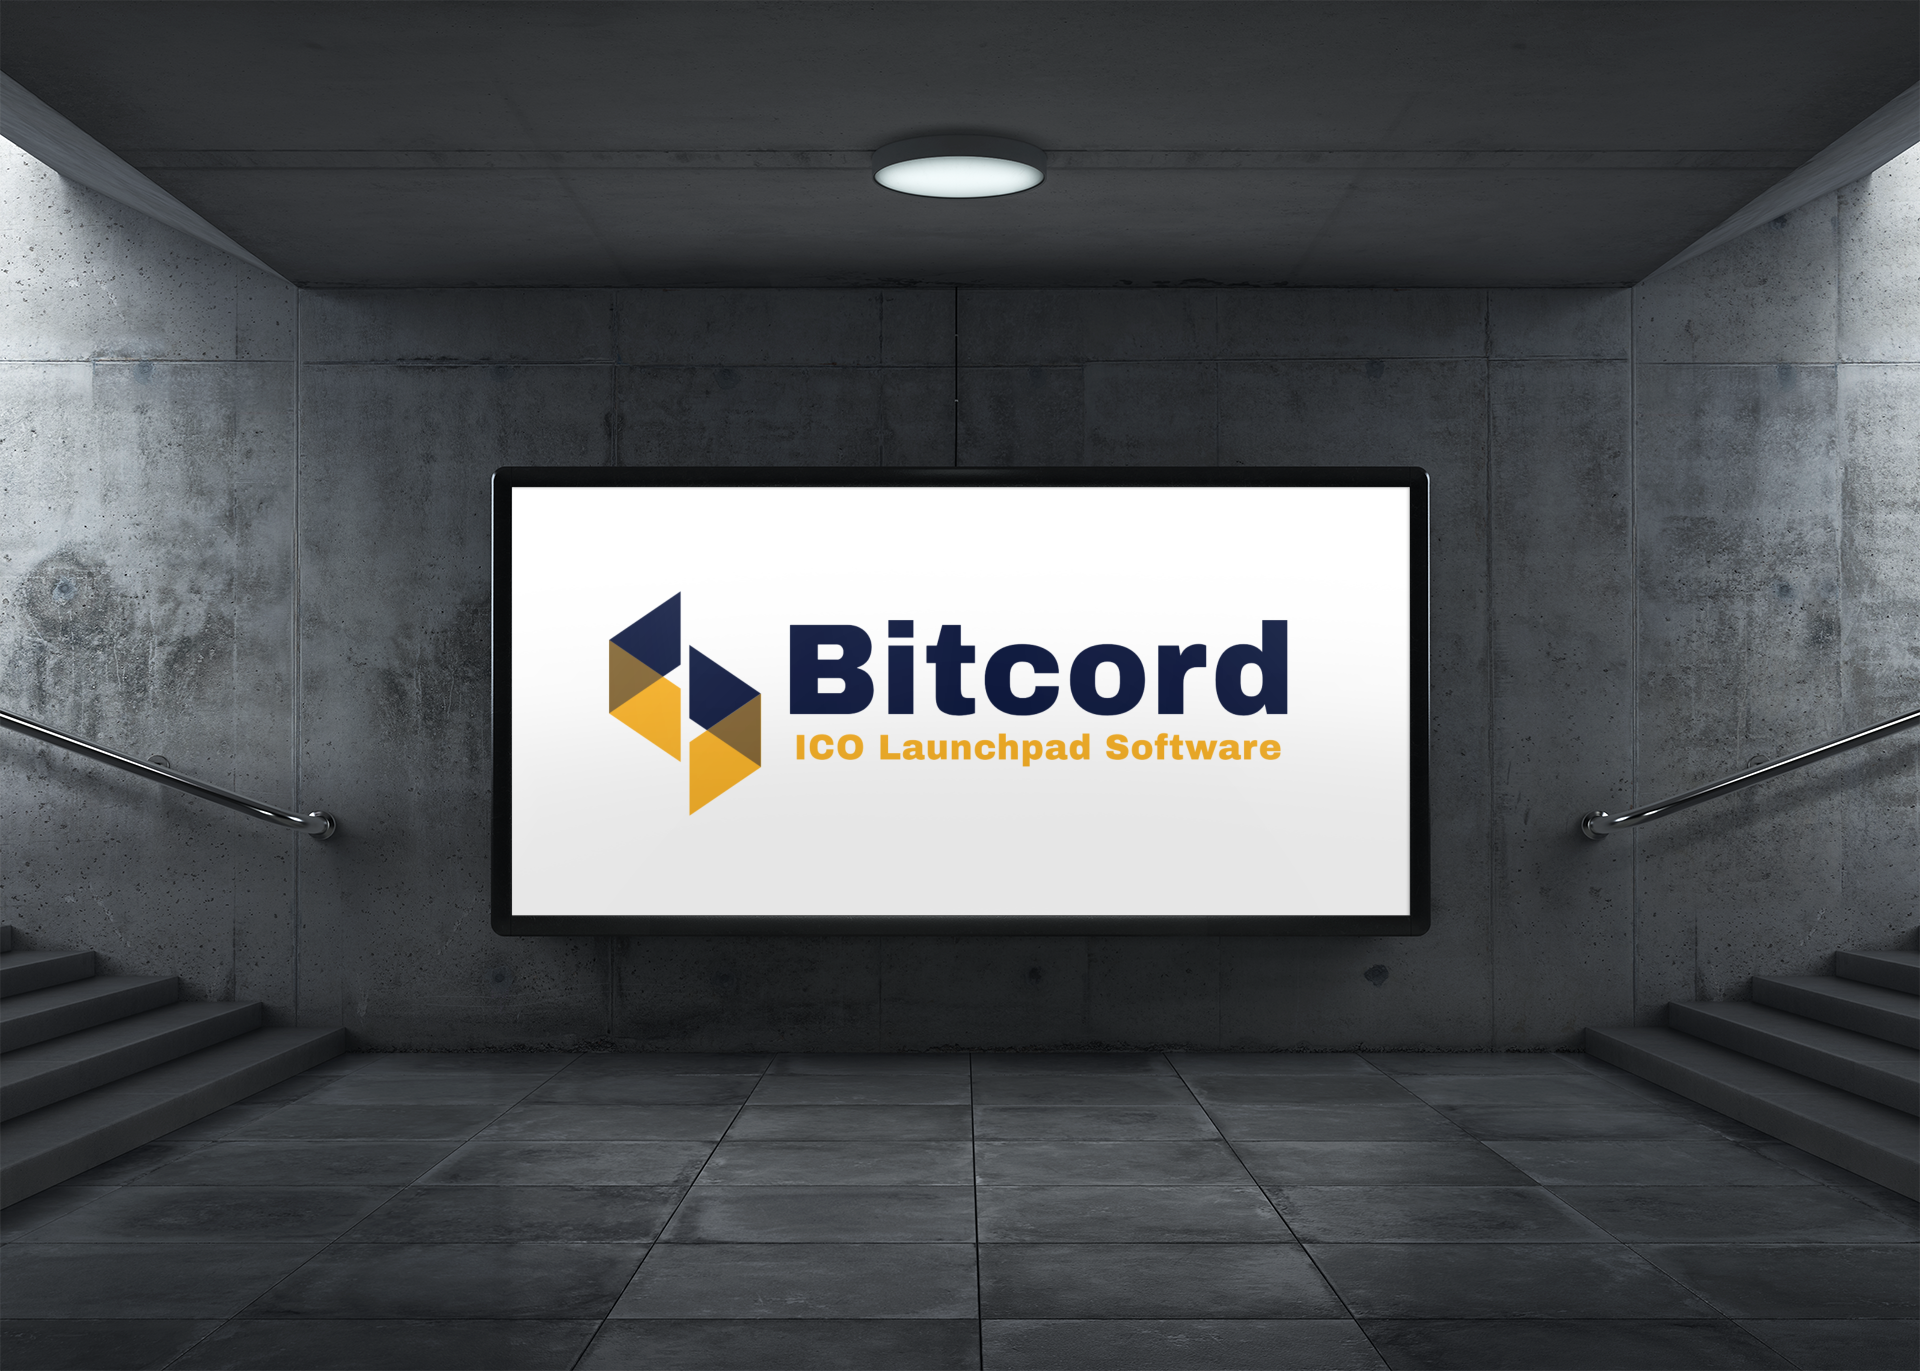 Bitcord.io